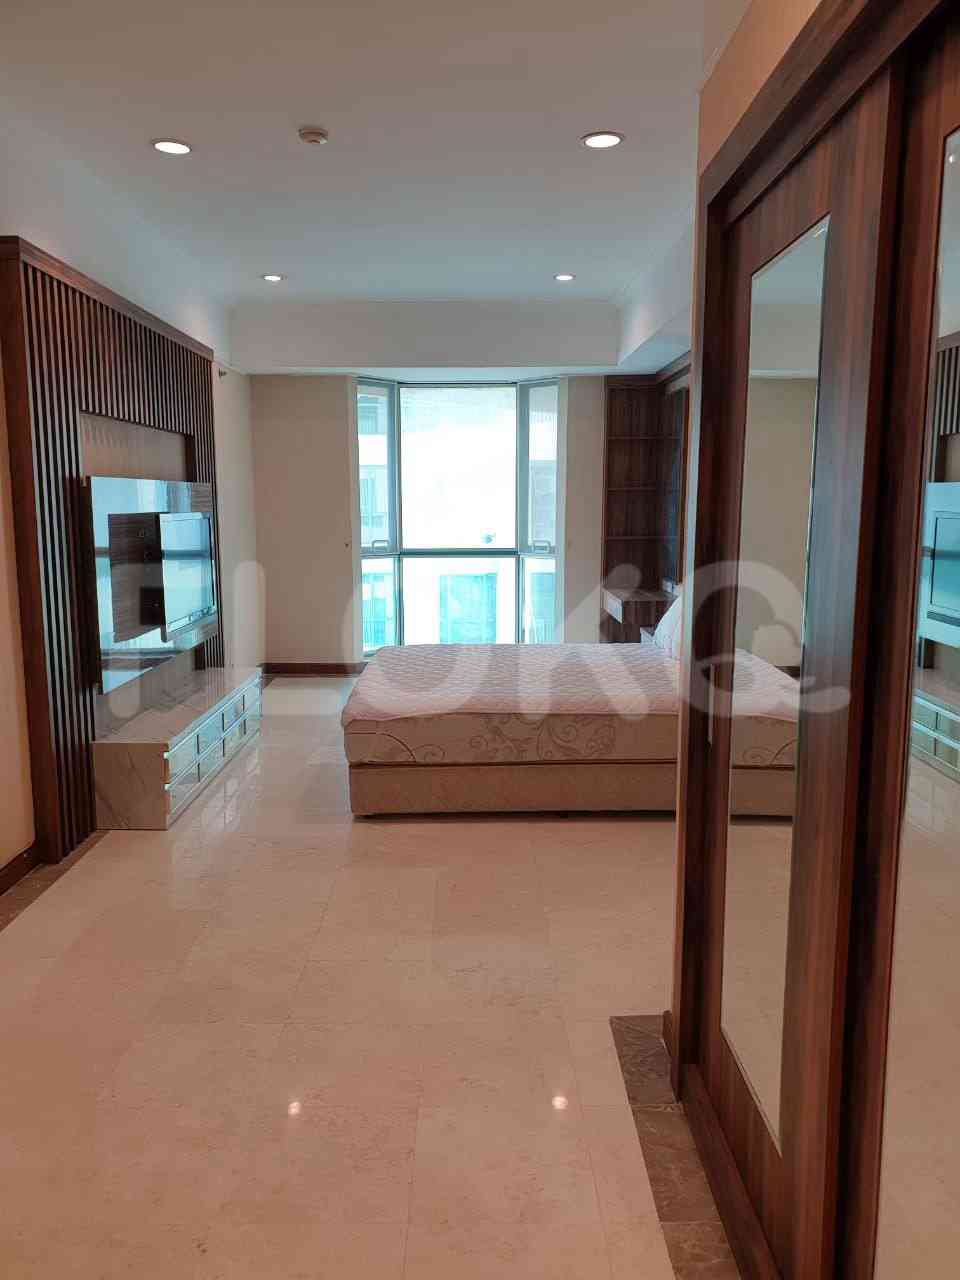 3 Bedroom on 15th Floor for Rent in Casablanca Apartment - ftebc2 11